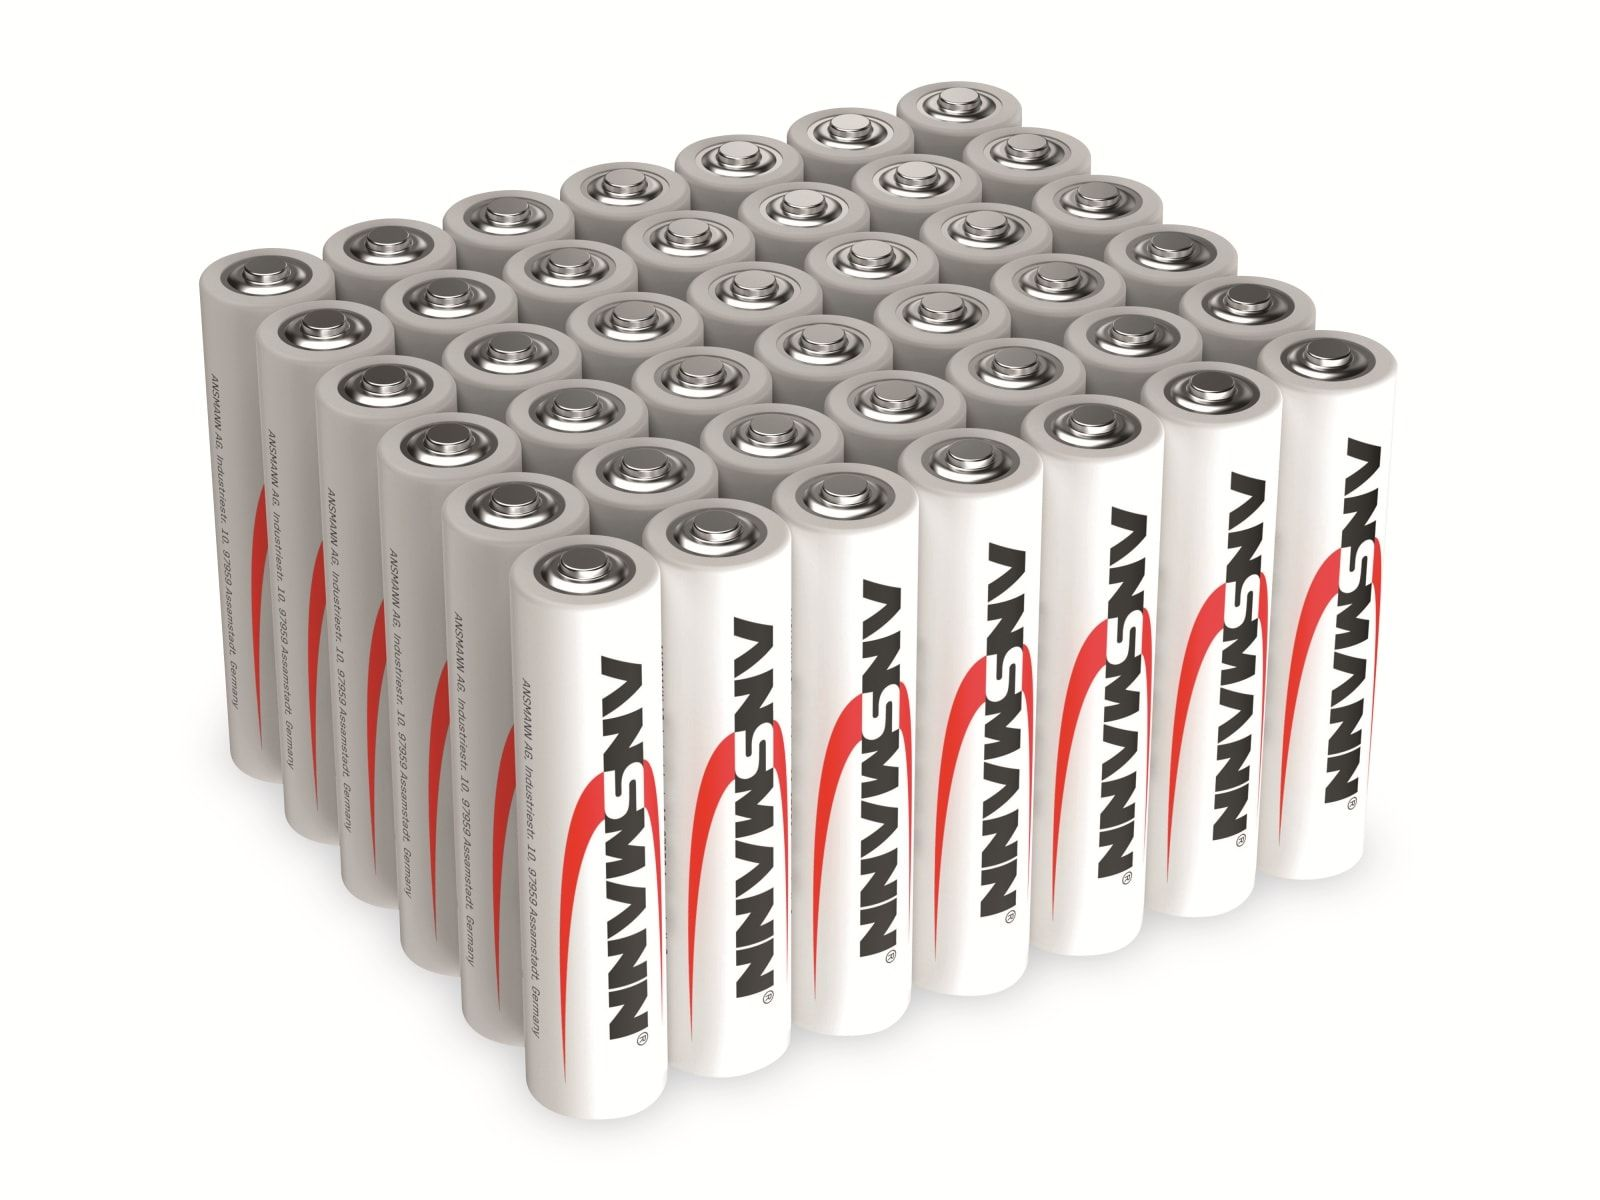 ANSMANN Micro-Batterie-Set, Alkaline, 42 Batterien Alkaline Stück